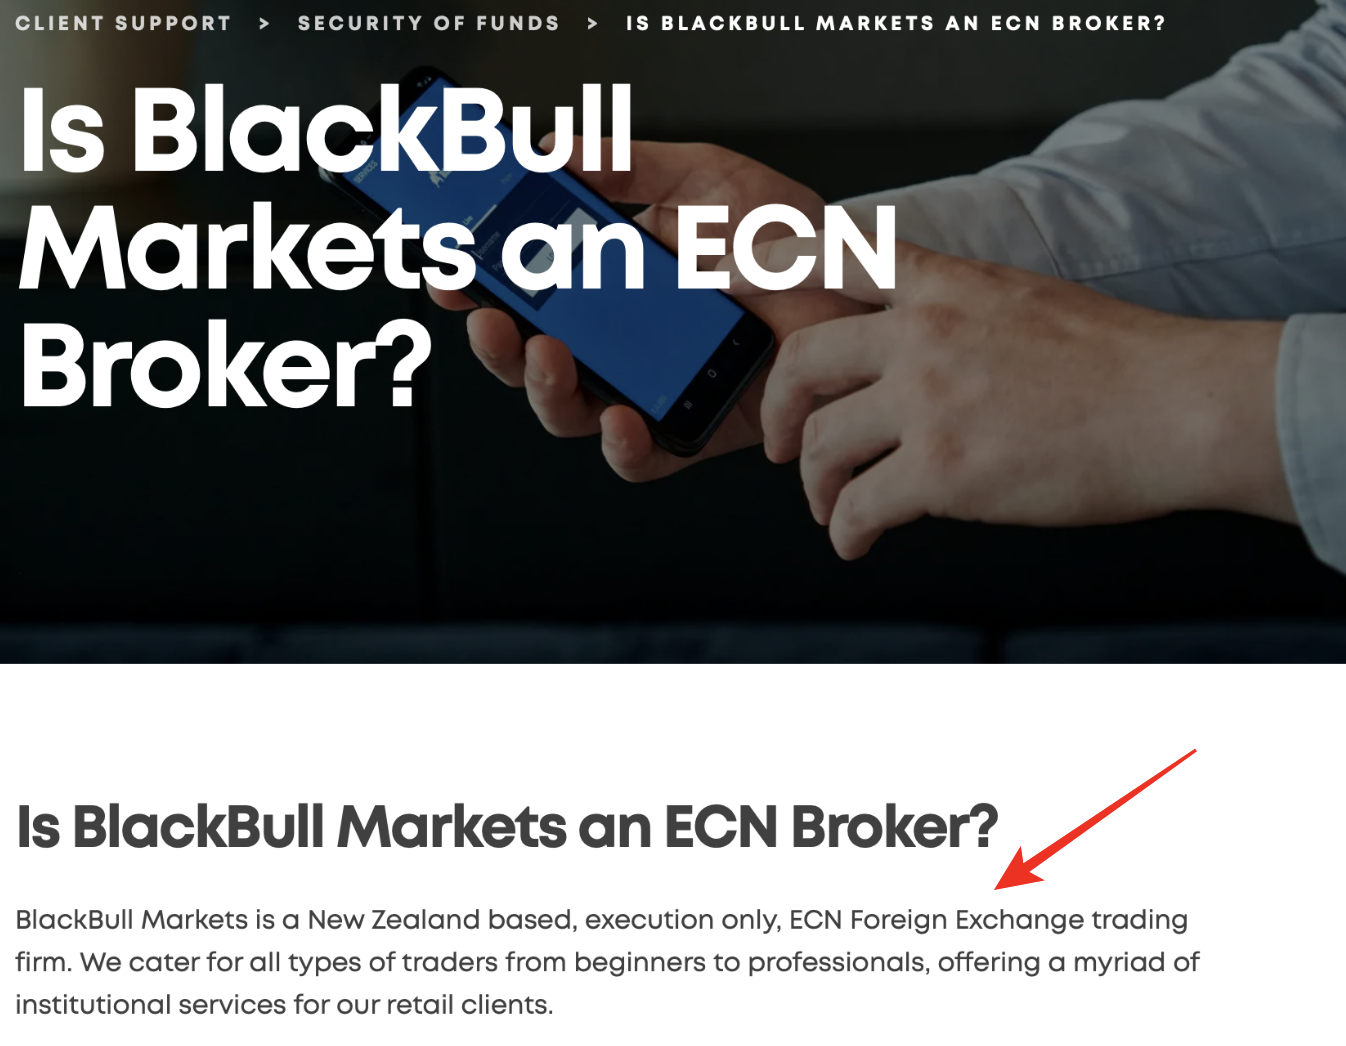 BlackBull Markets est un courtier ECN